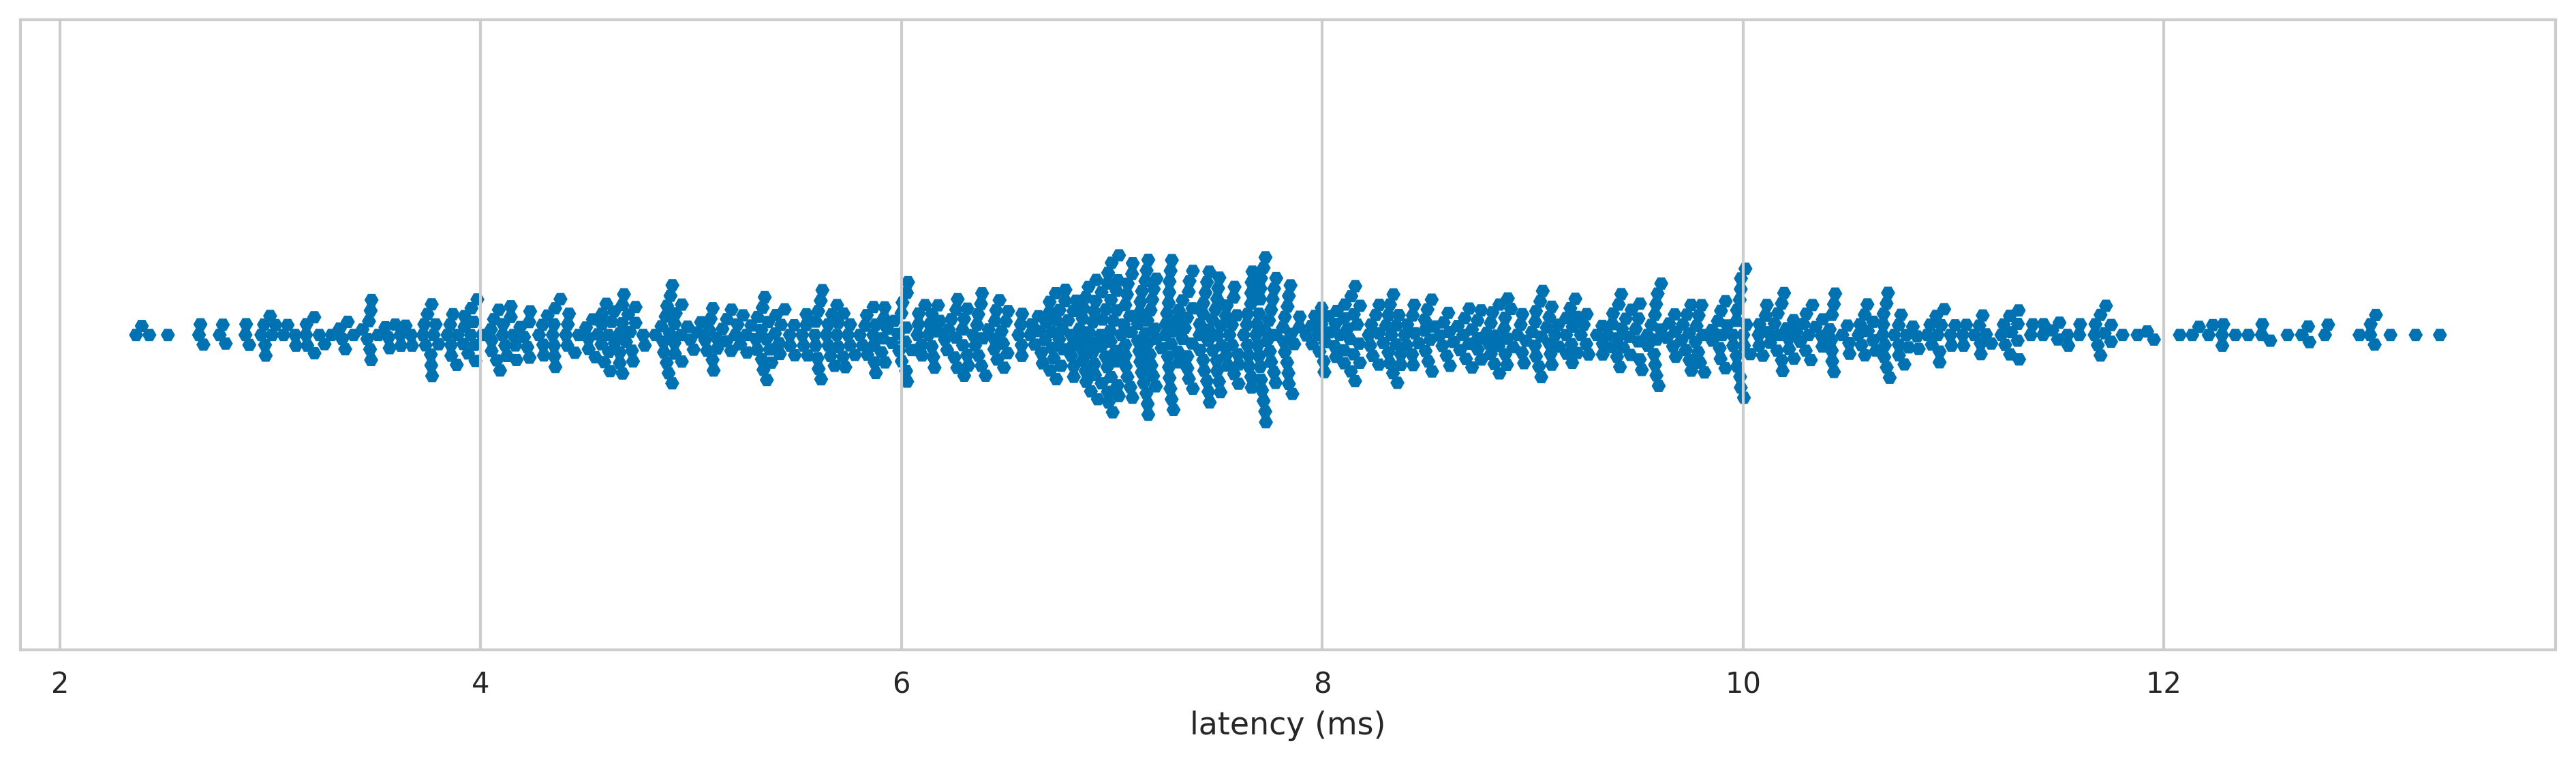 PX-1800 latency distribution 